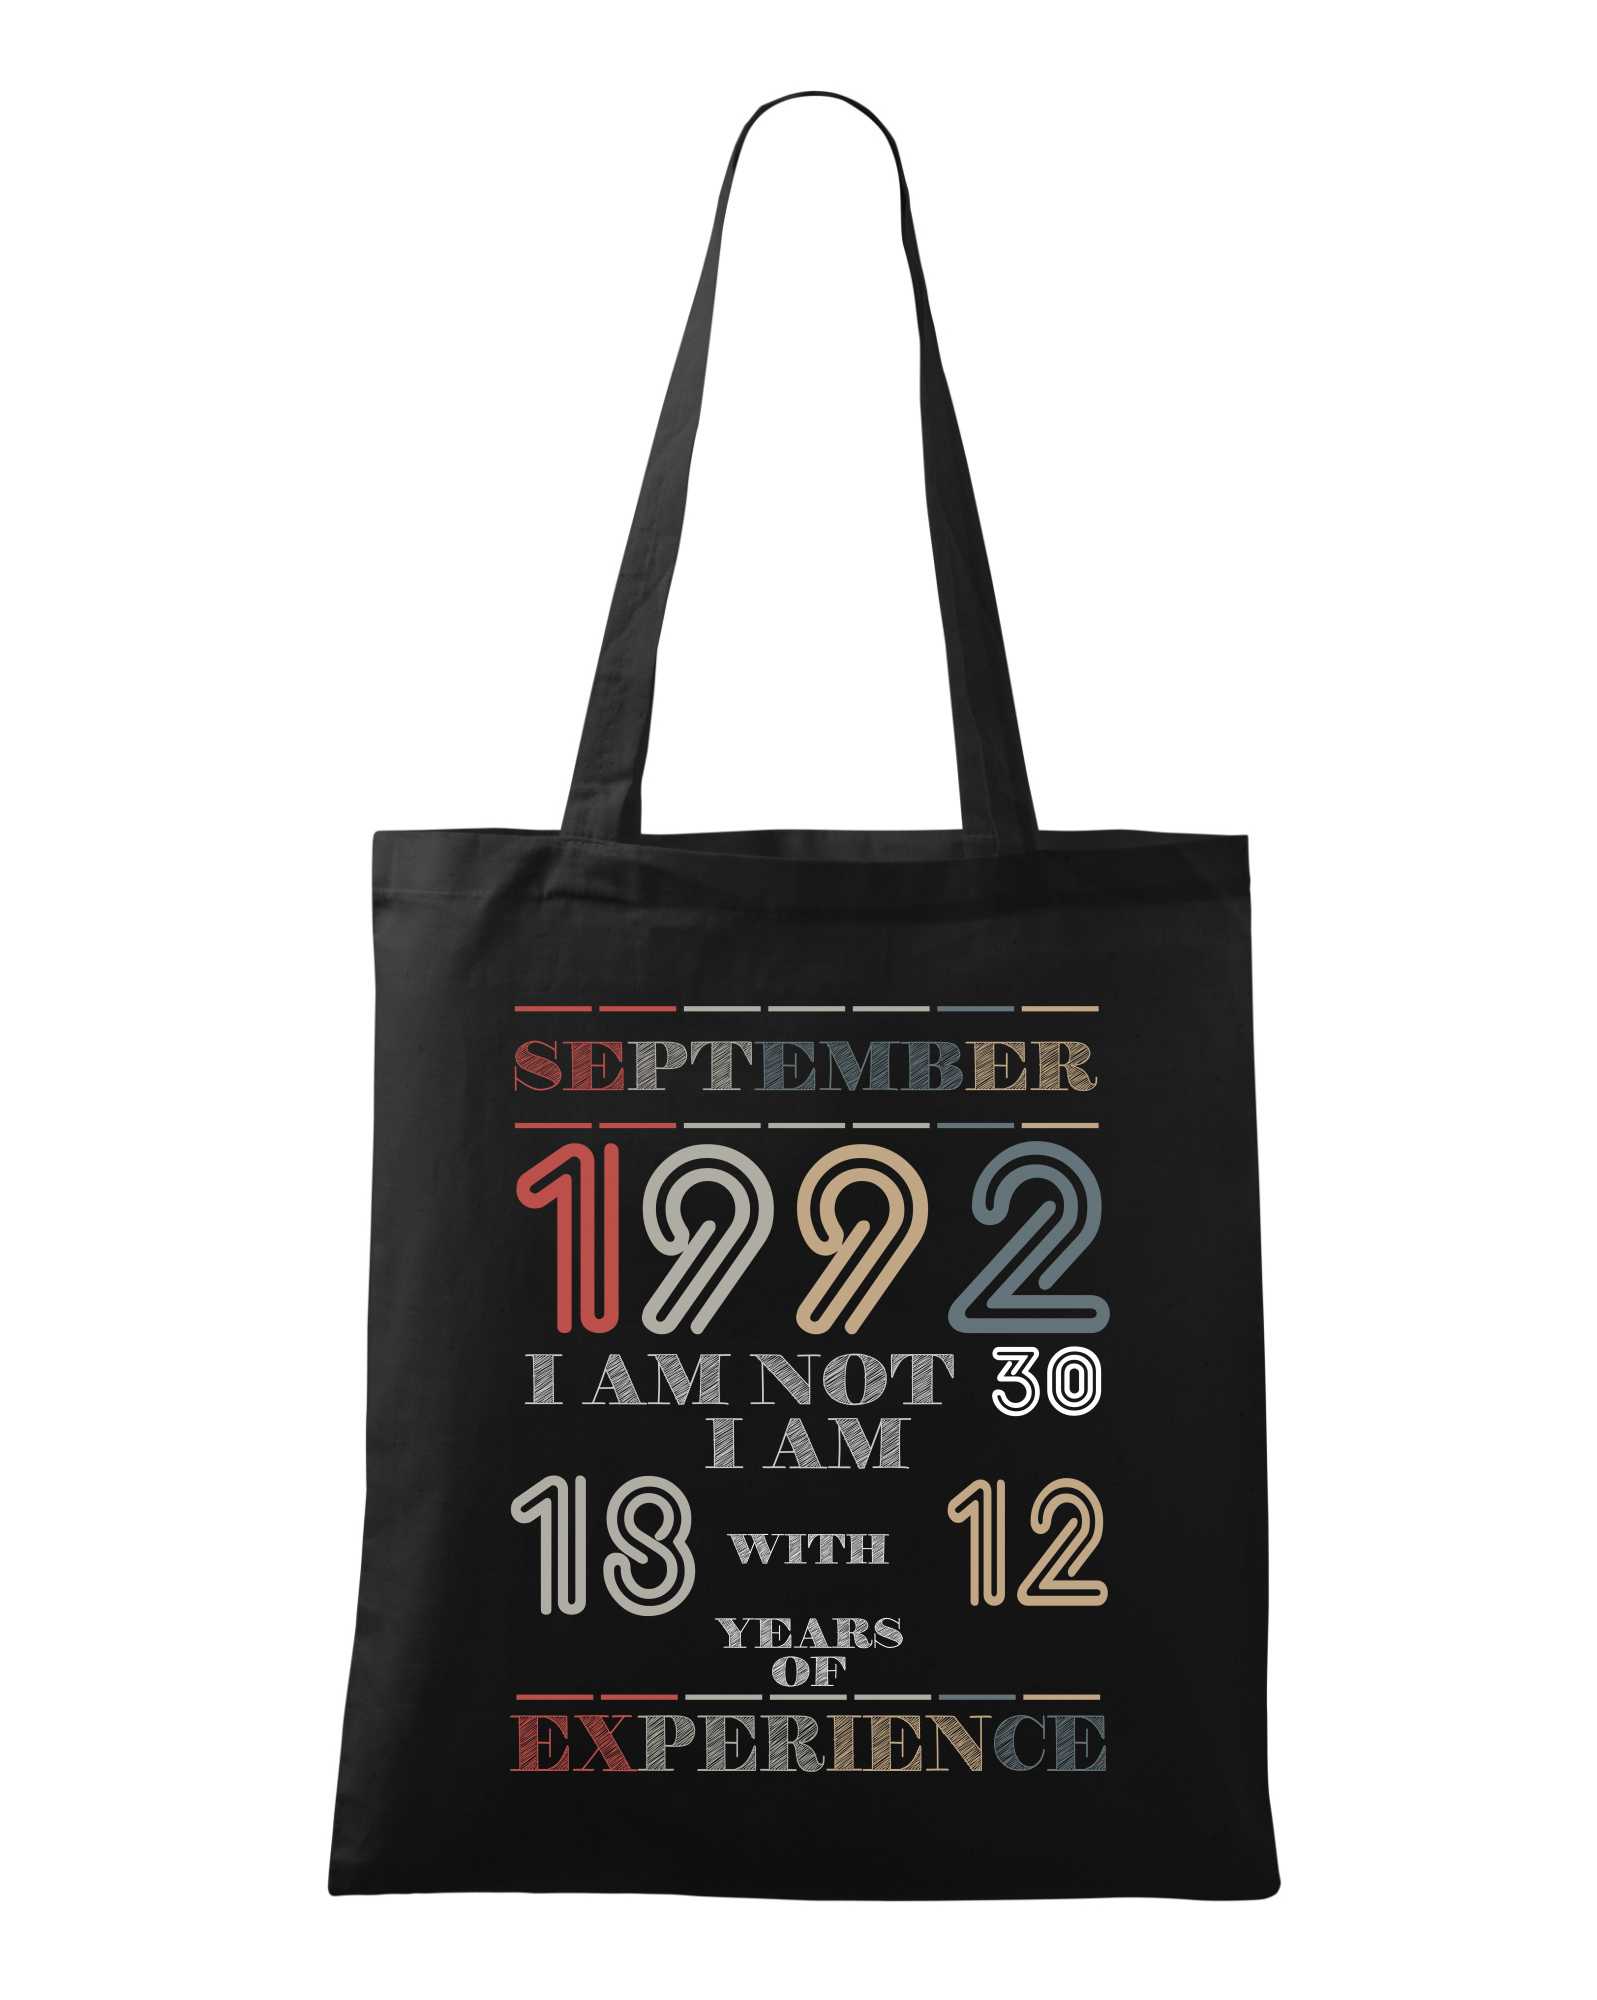 Narozeniny experience 1992 September - Taška malá